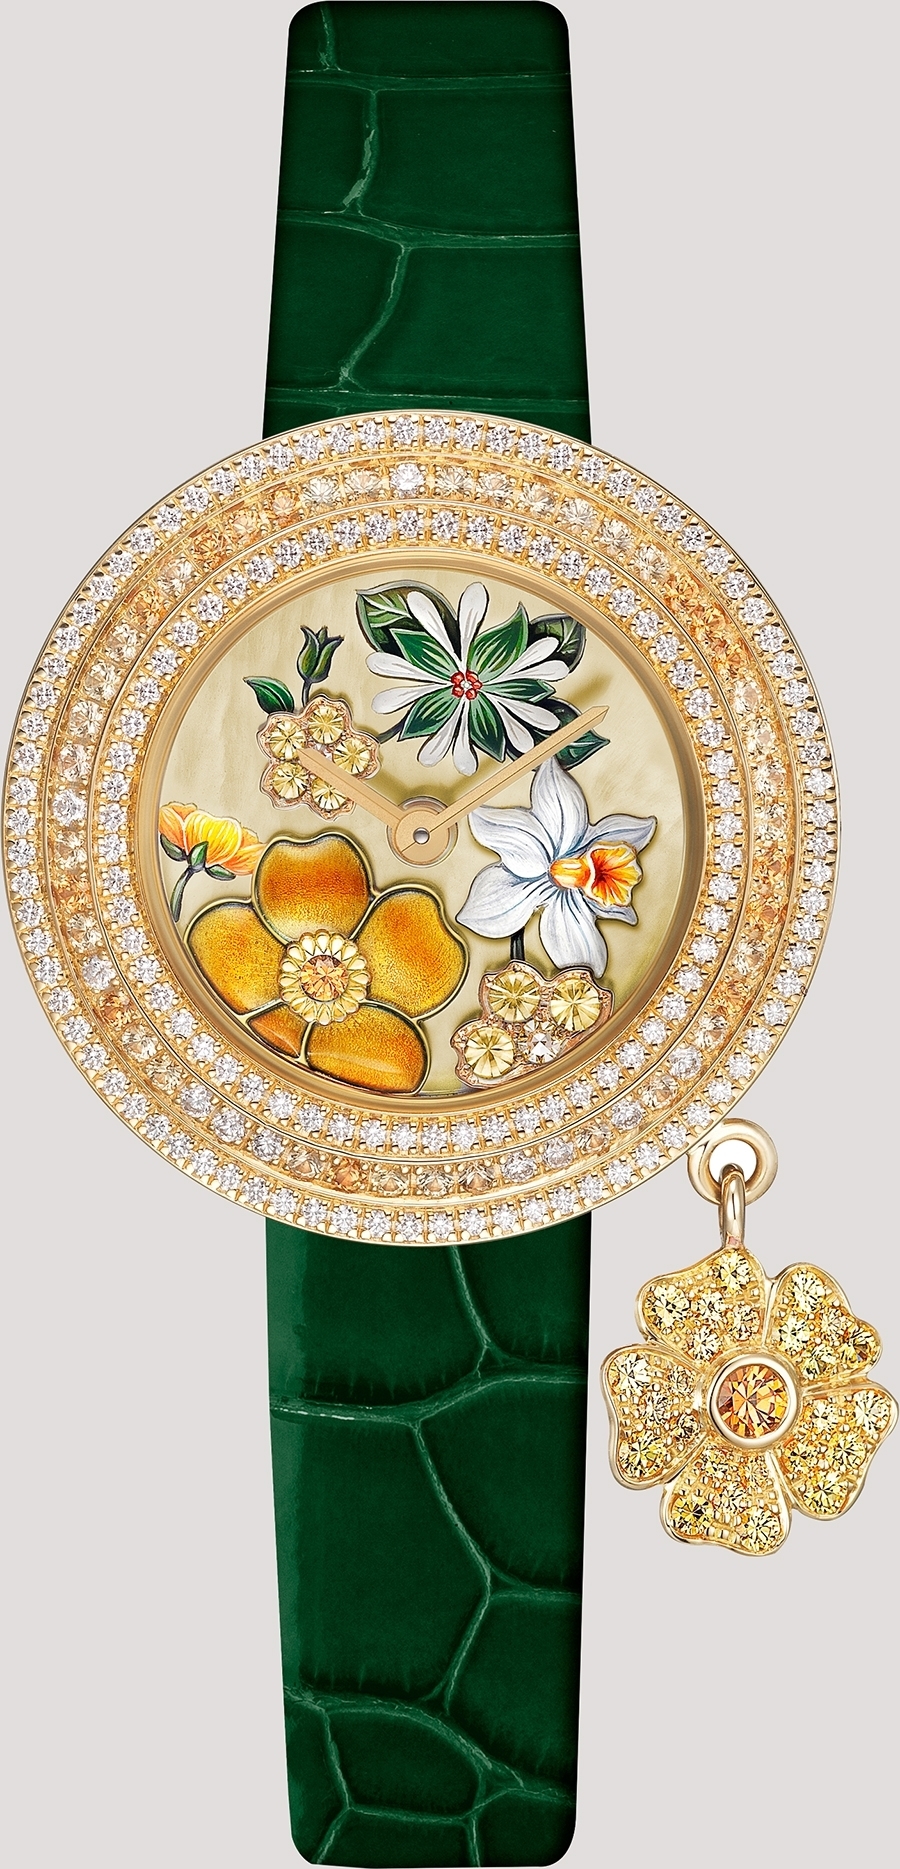 imagen 3 de Estallido floral en los relojes de Van Cleef & Arpels.